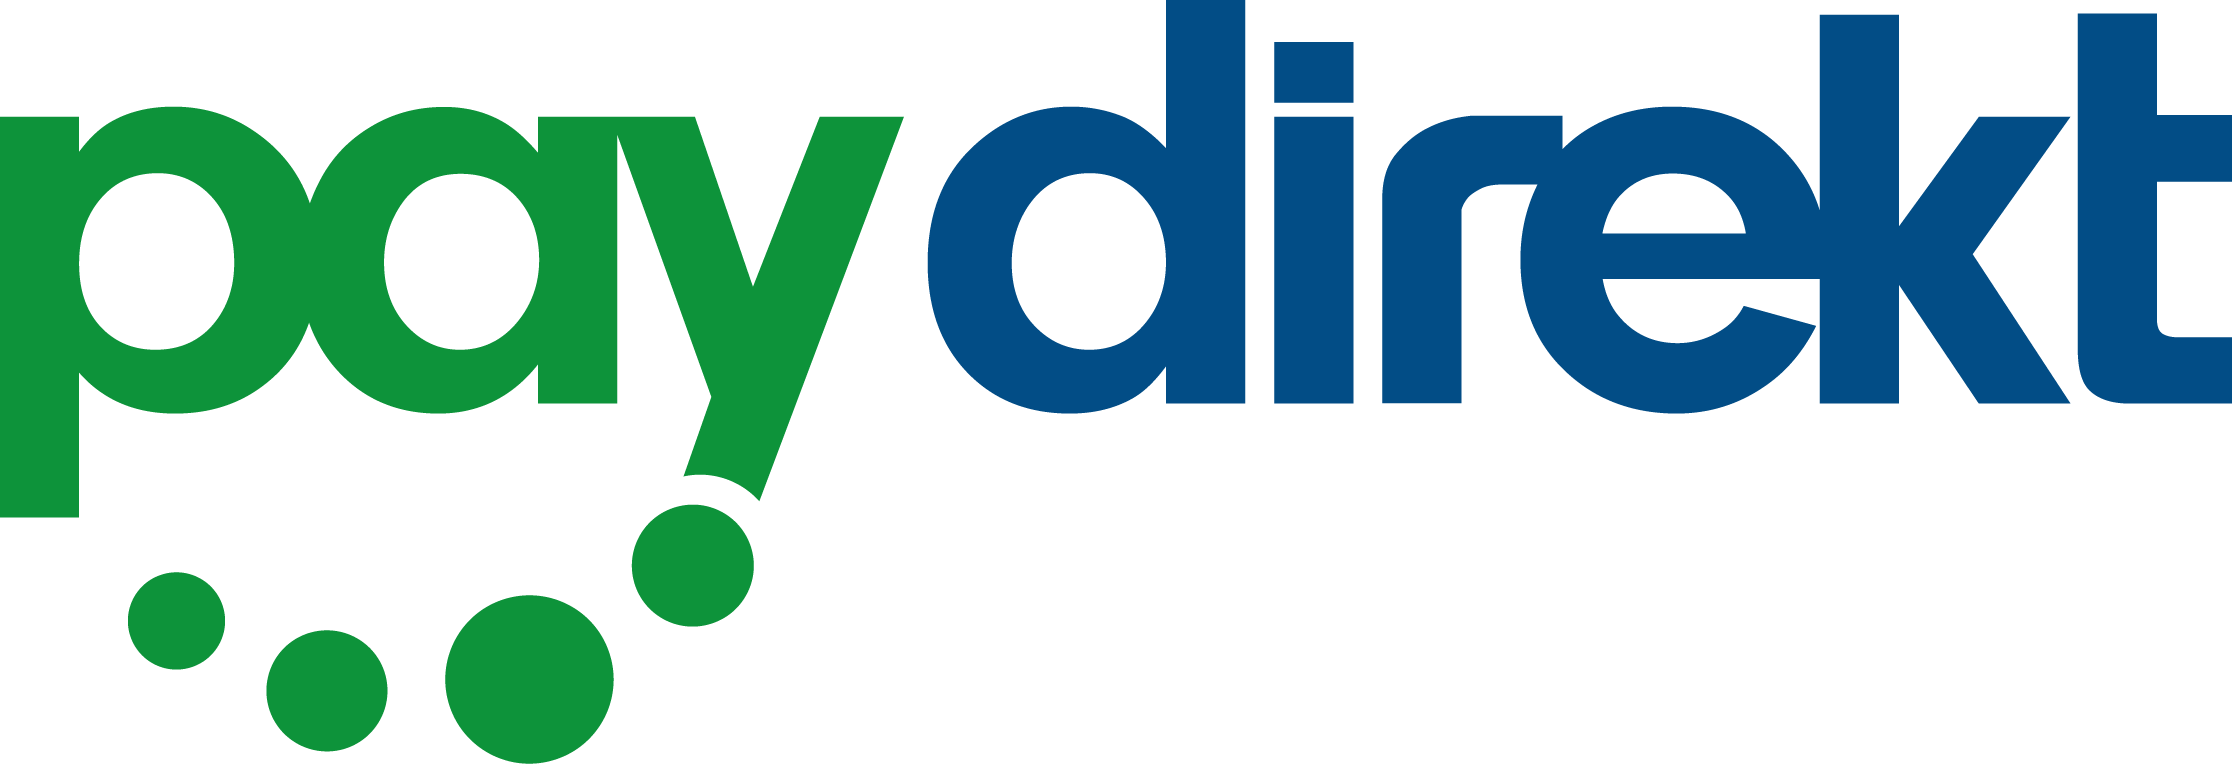 paydirekt_logo_4c